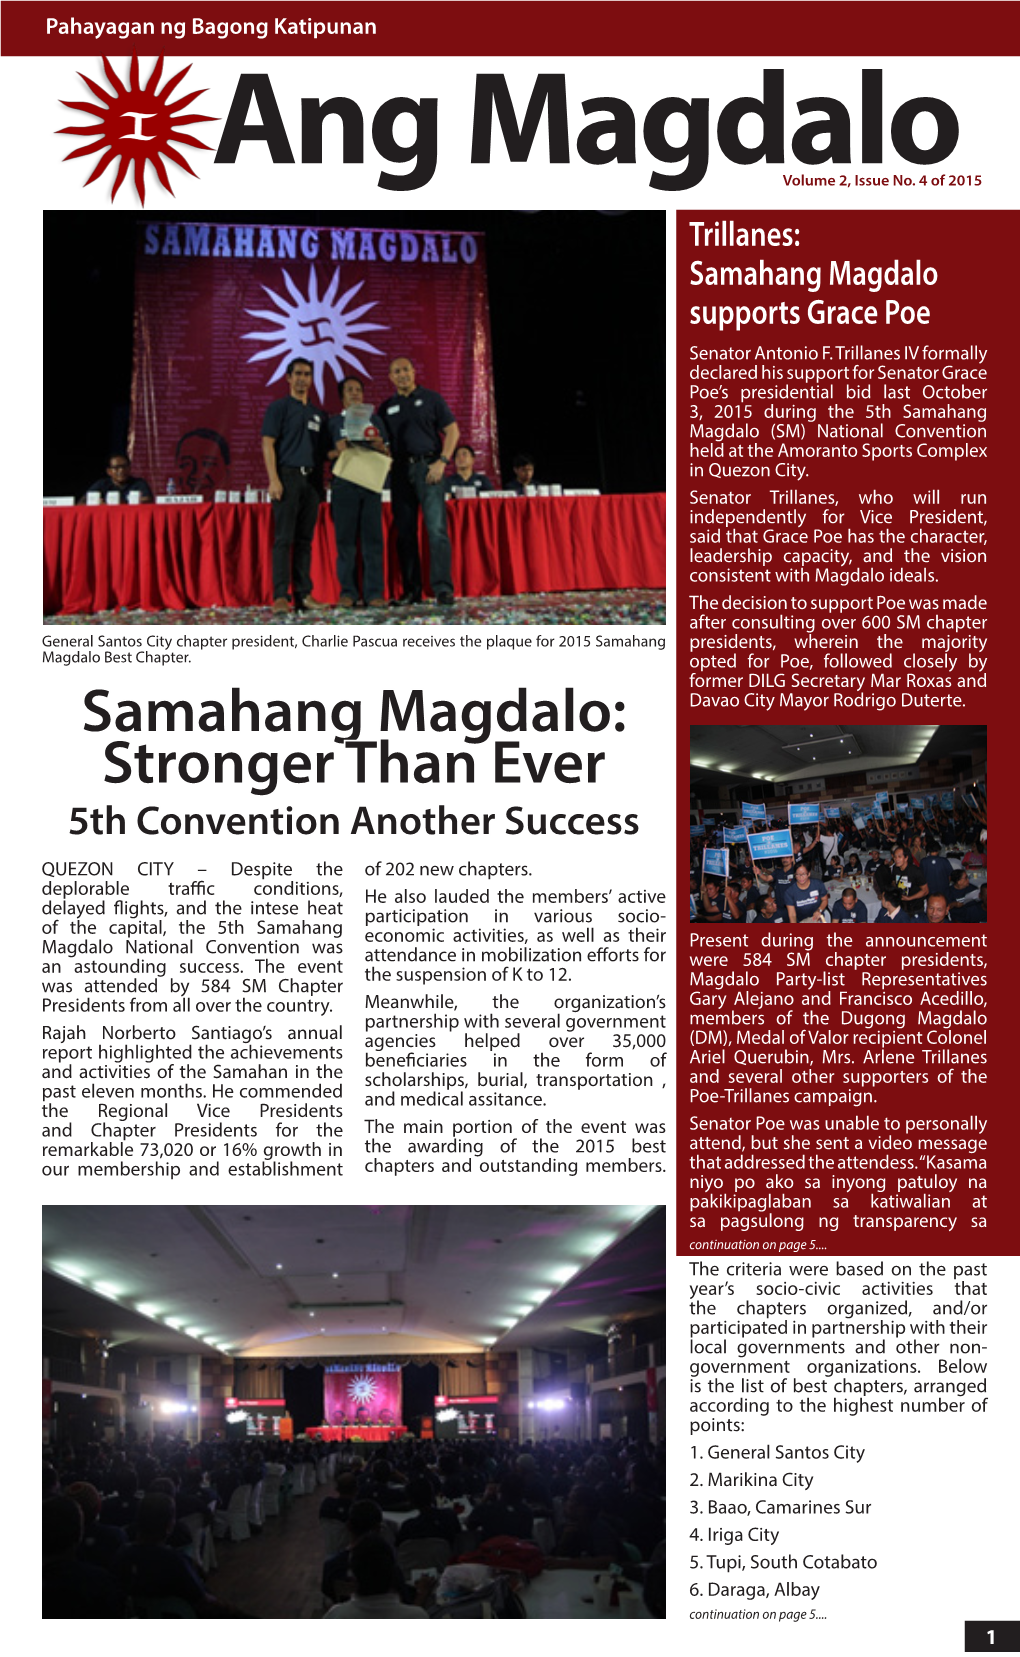 Samahang Magdalo: Stronger Than Ever Continuation